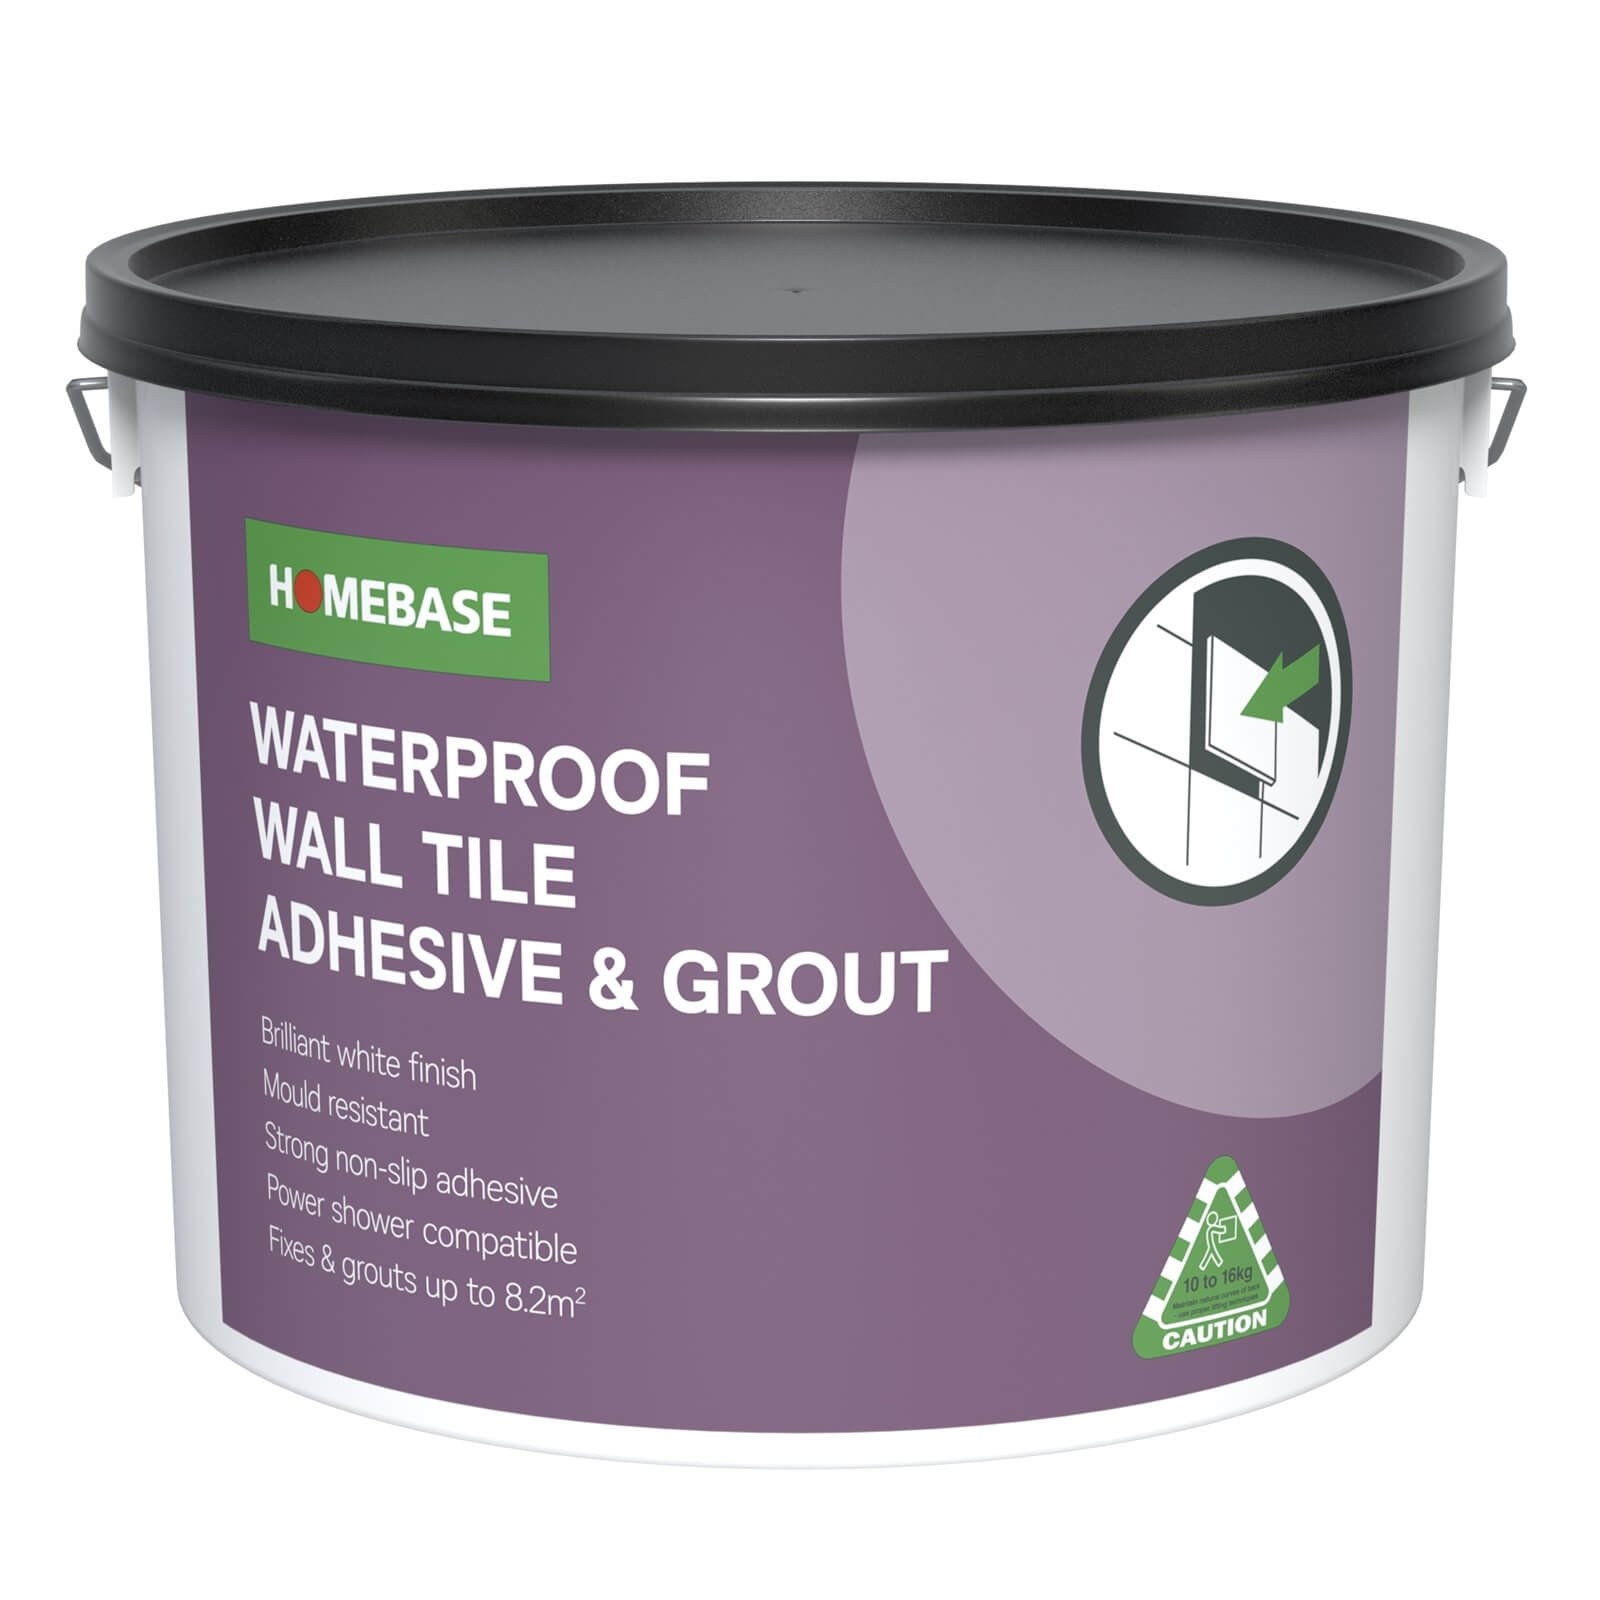 Homebase Adhesive & Grout - 13.8kg